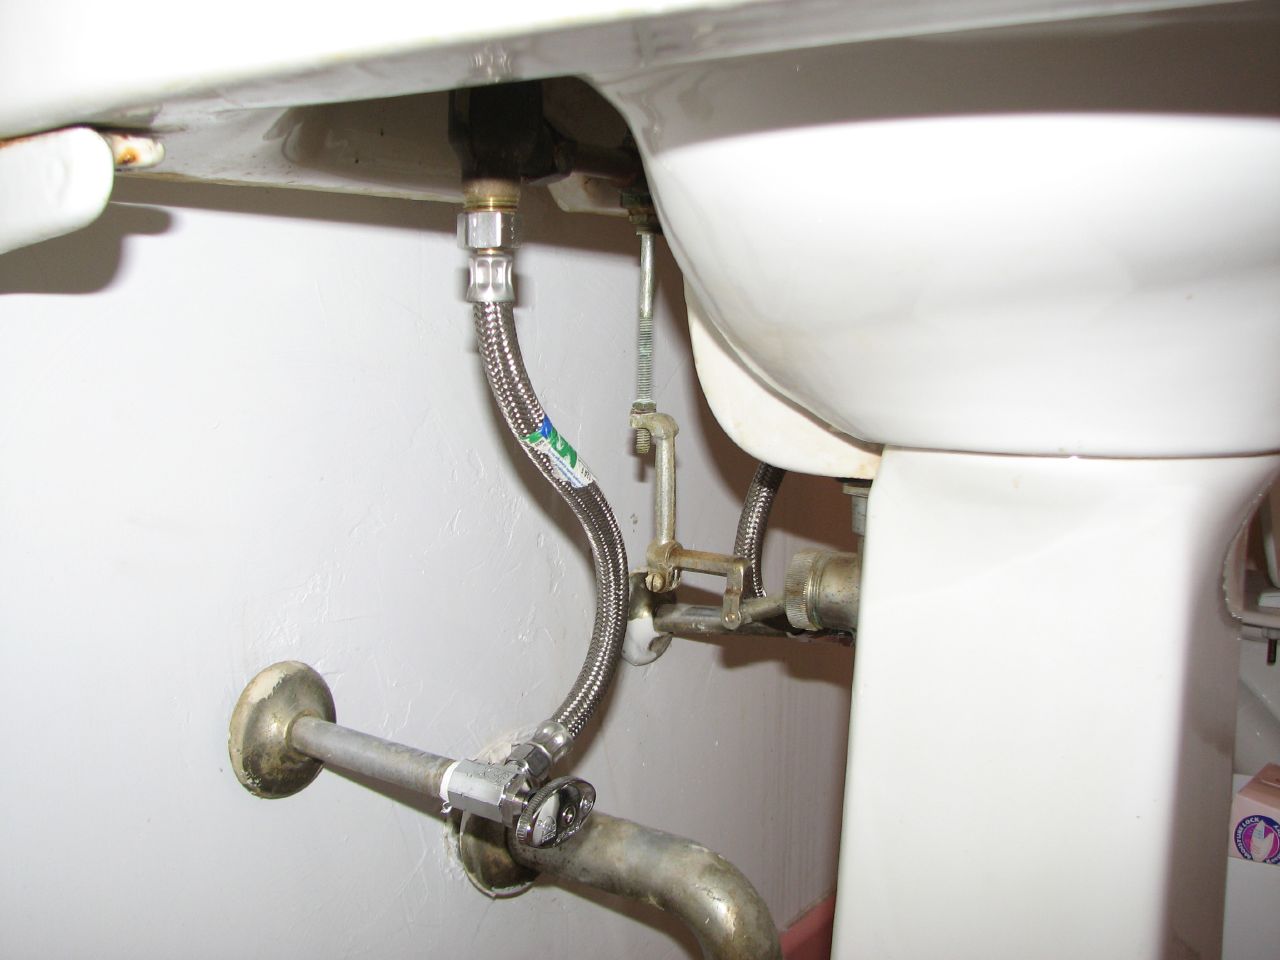 a closeup po of an odd looking metal sink